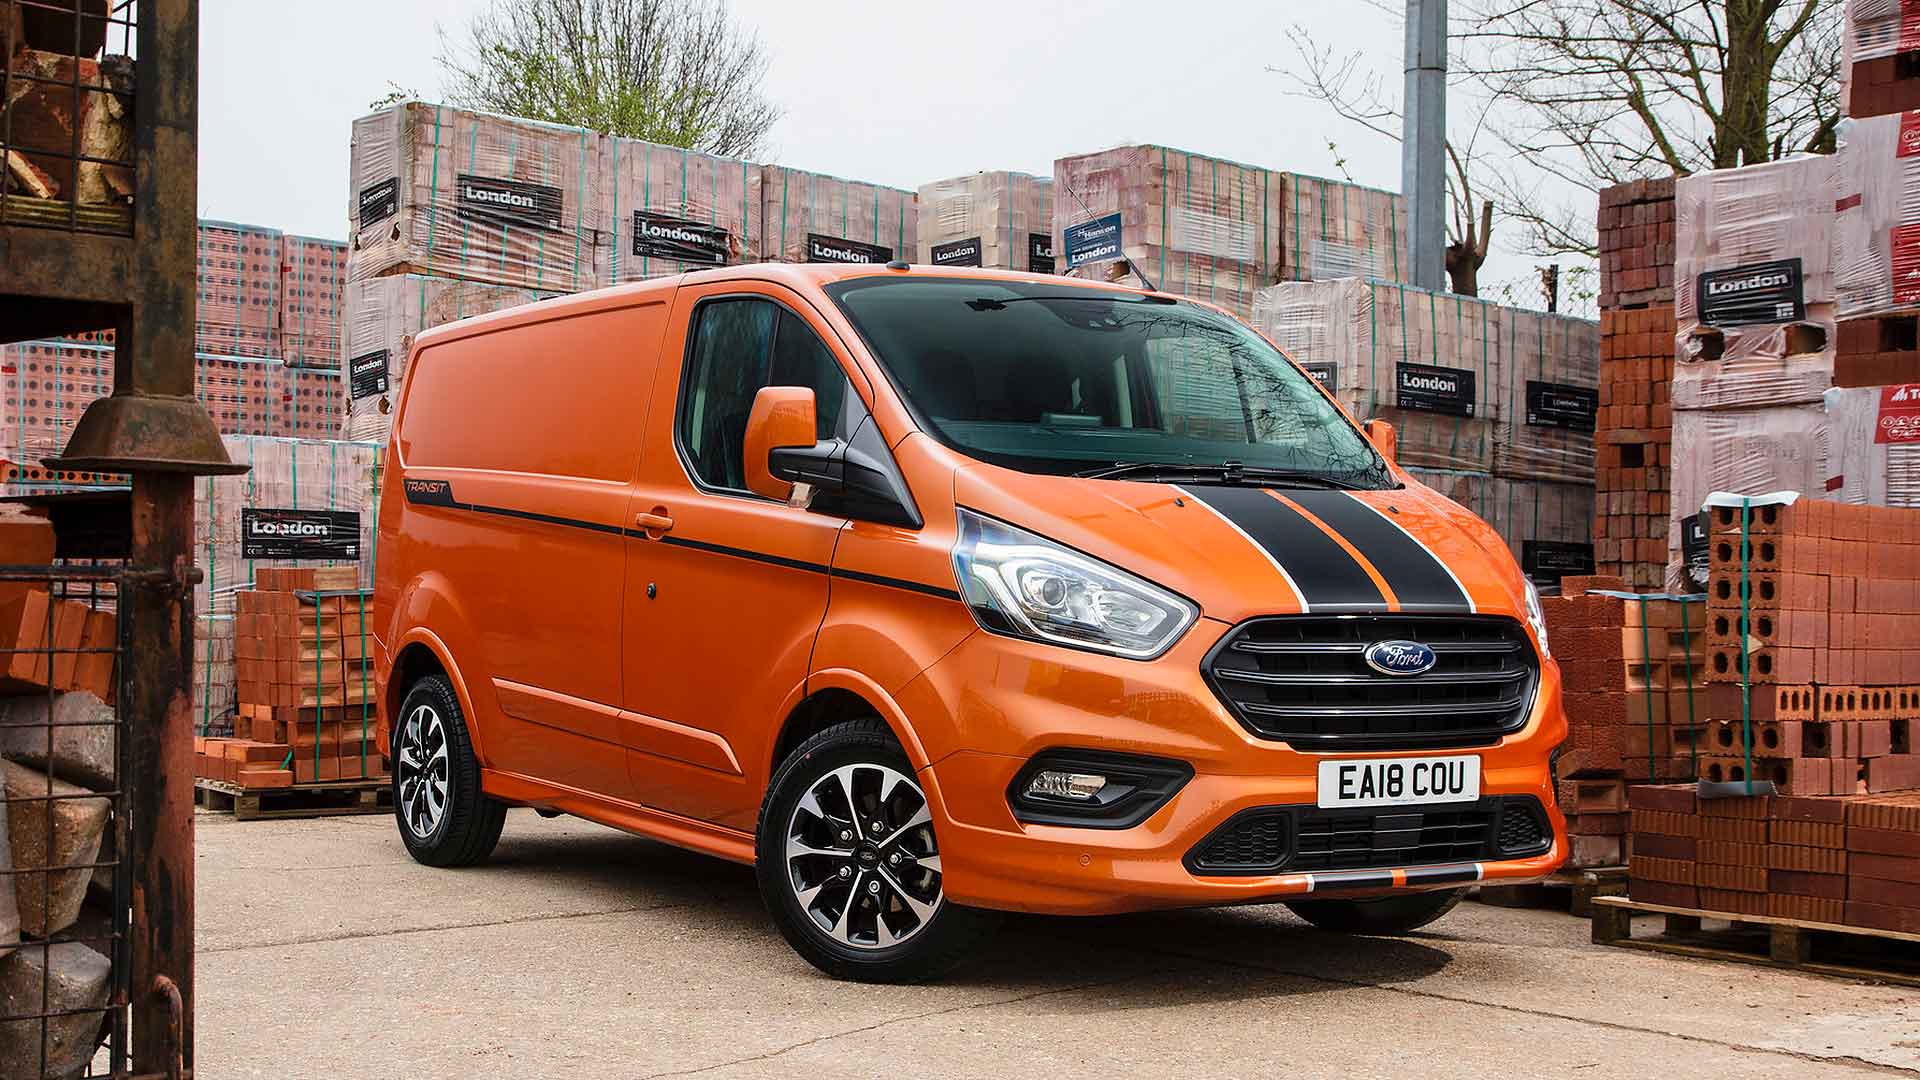 Ford Transit Custom VAN is Britainâs third best-selling vehicle